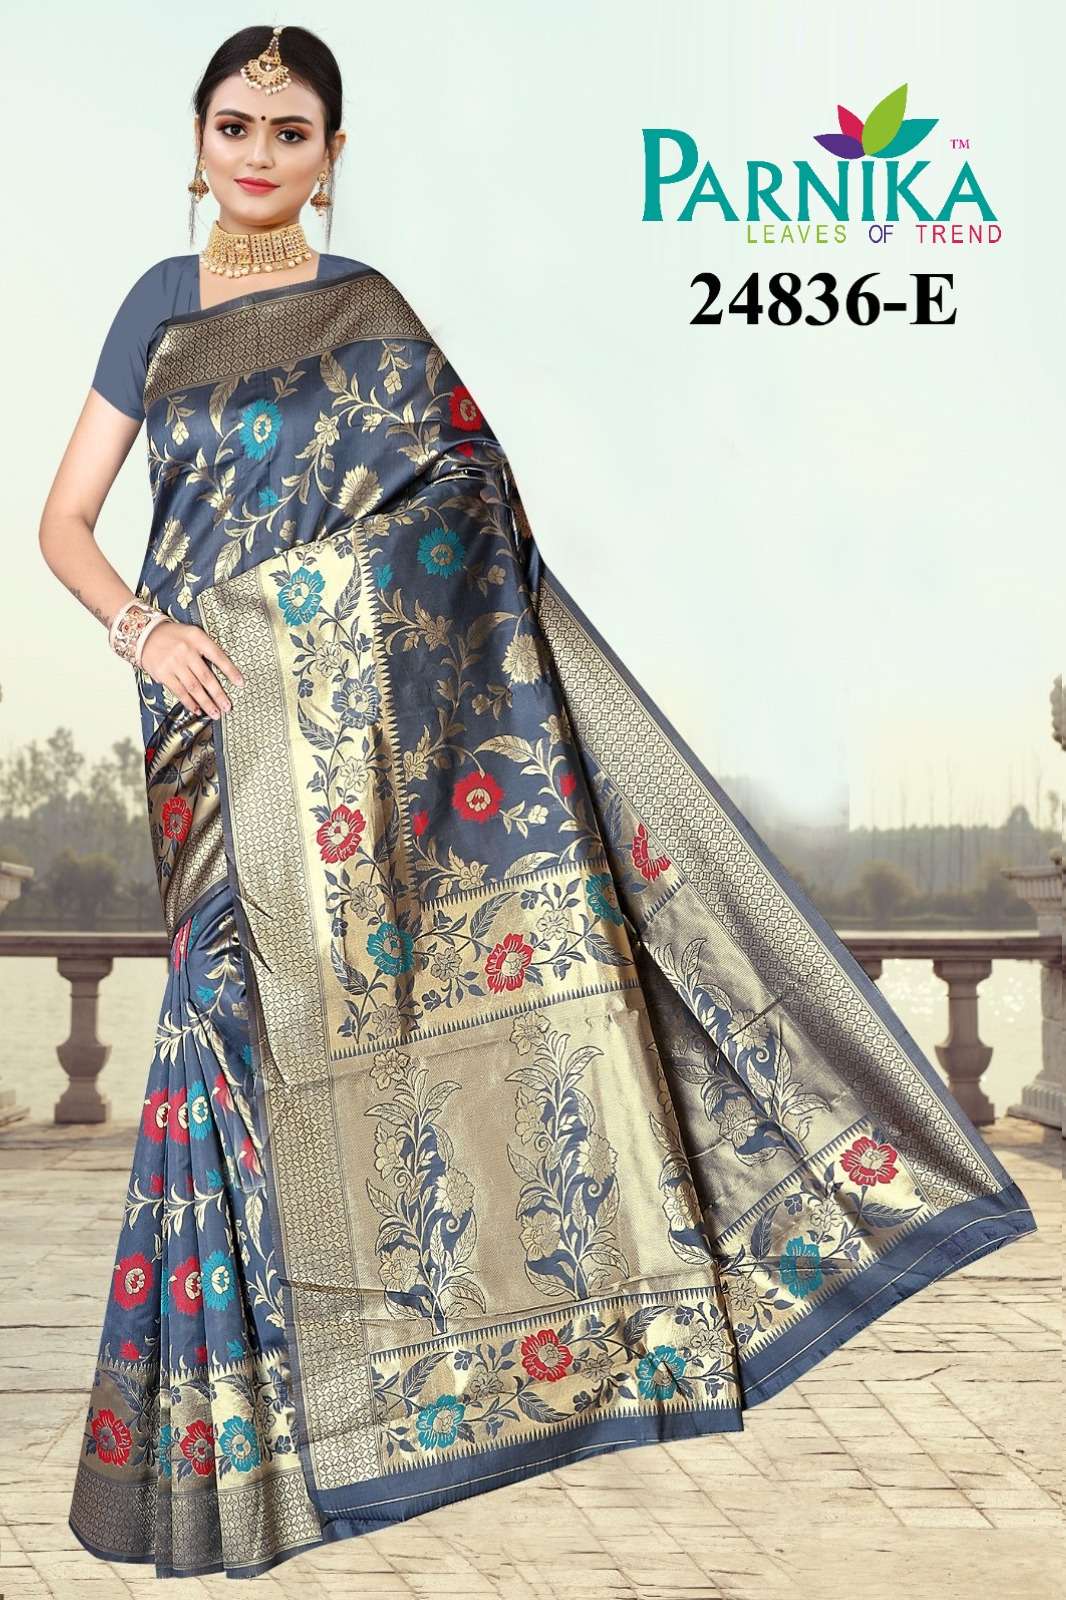 Parnika India Lichi Silk Jacquard Sarees Festive Wear Wedding Saree in Wholesale rate - 24836